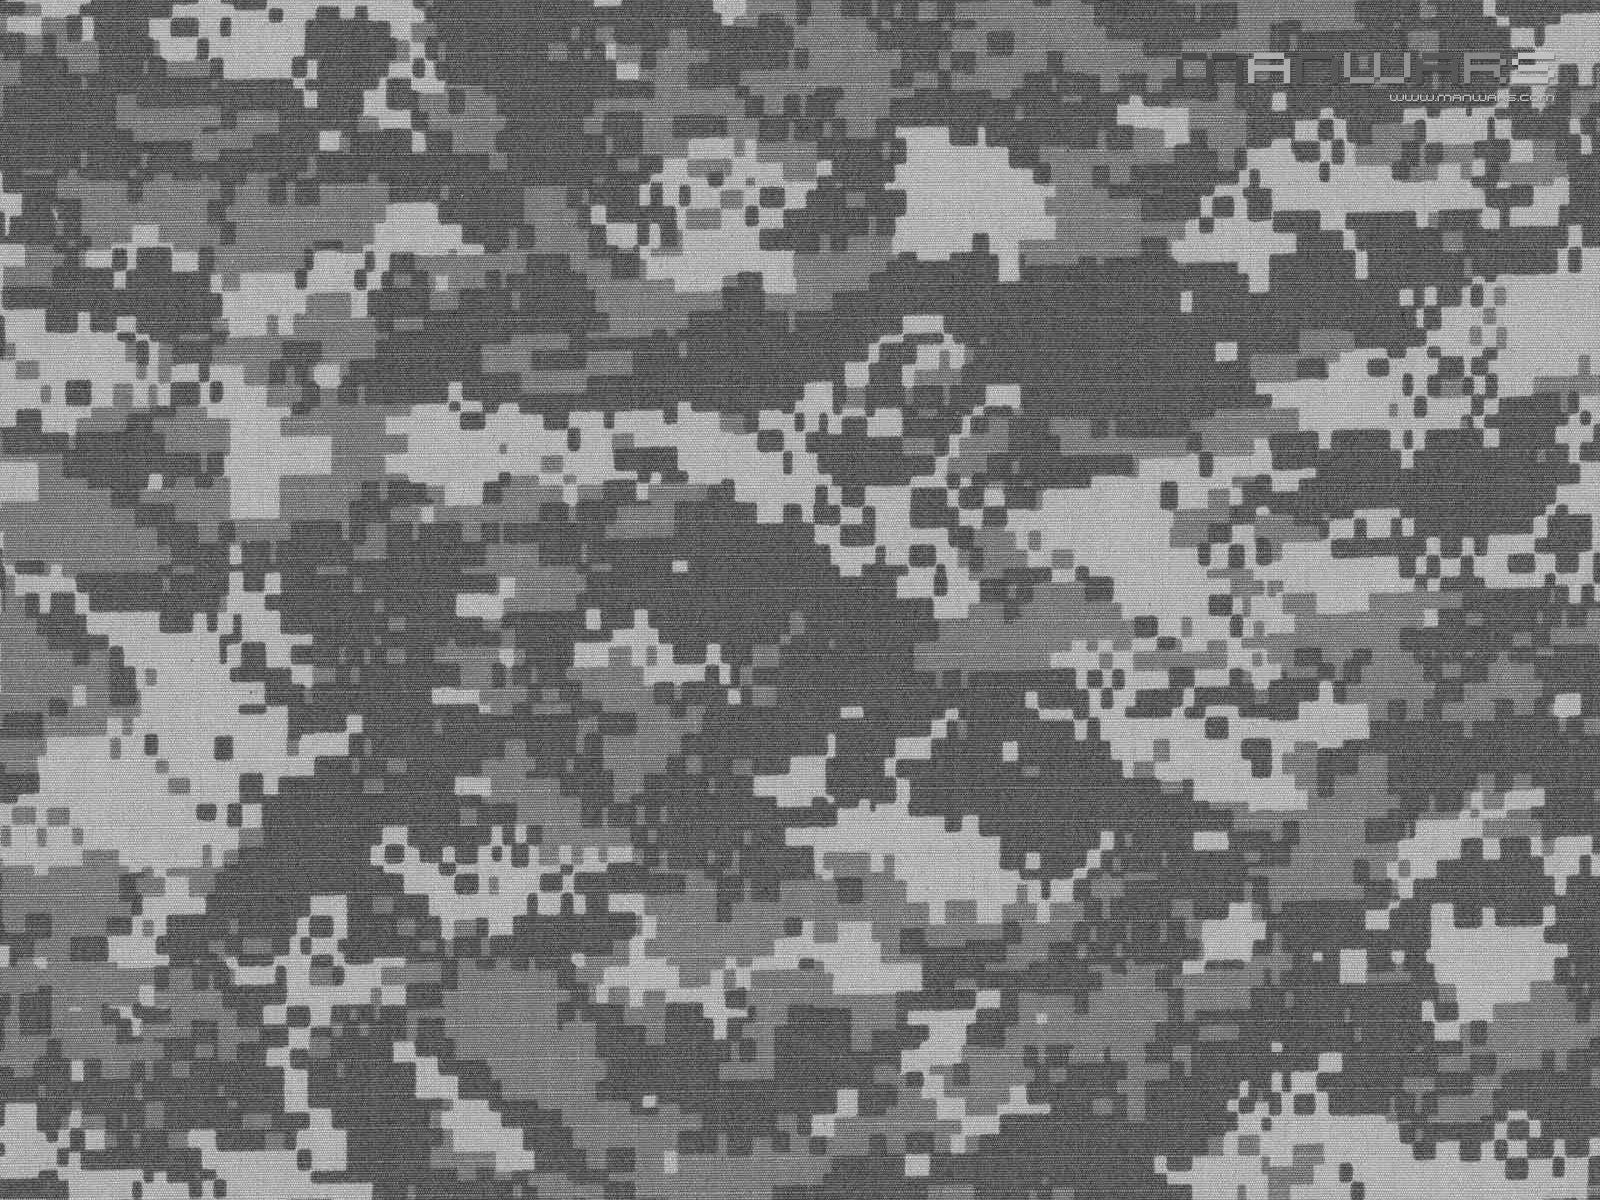 Camouflage Wallpaper For Phones (49 Wallpaper)